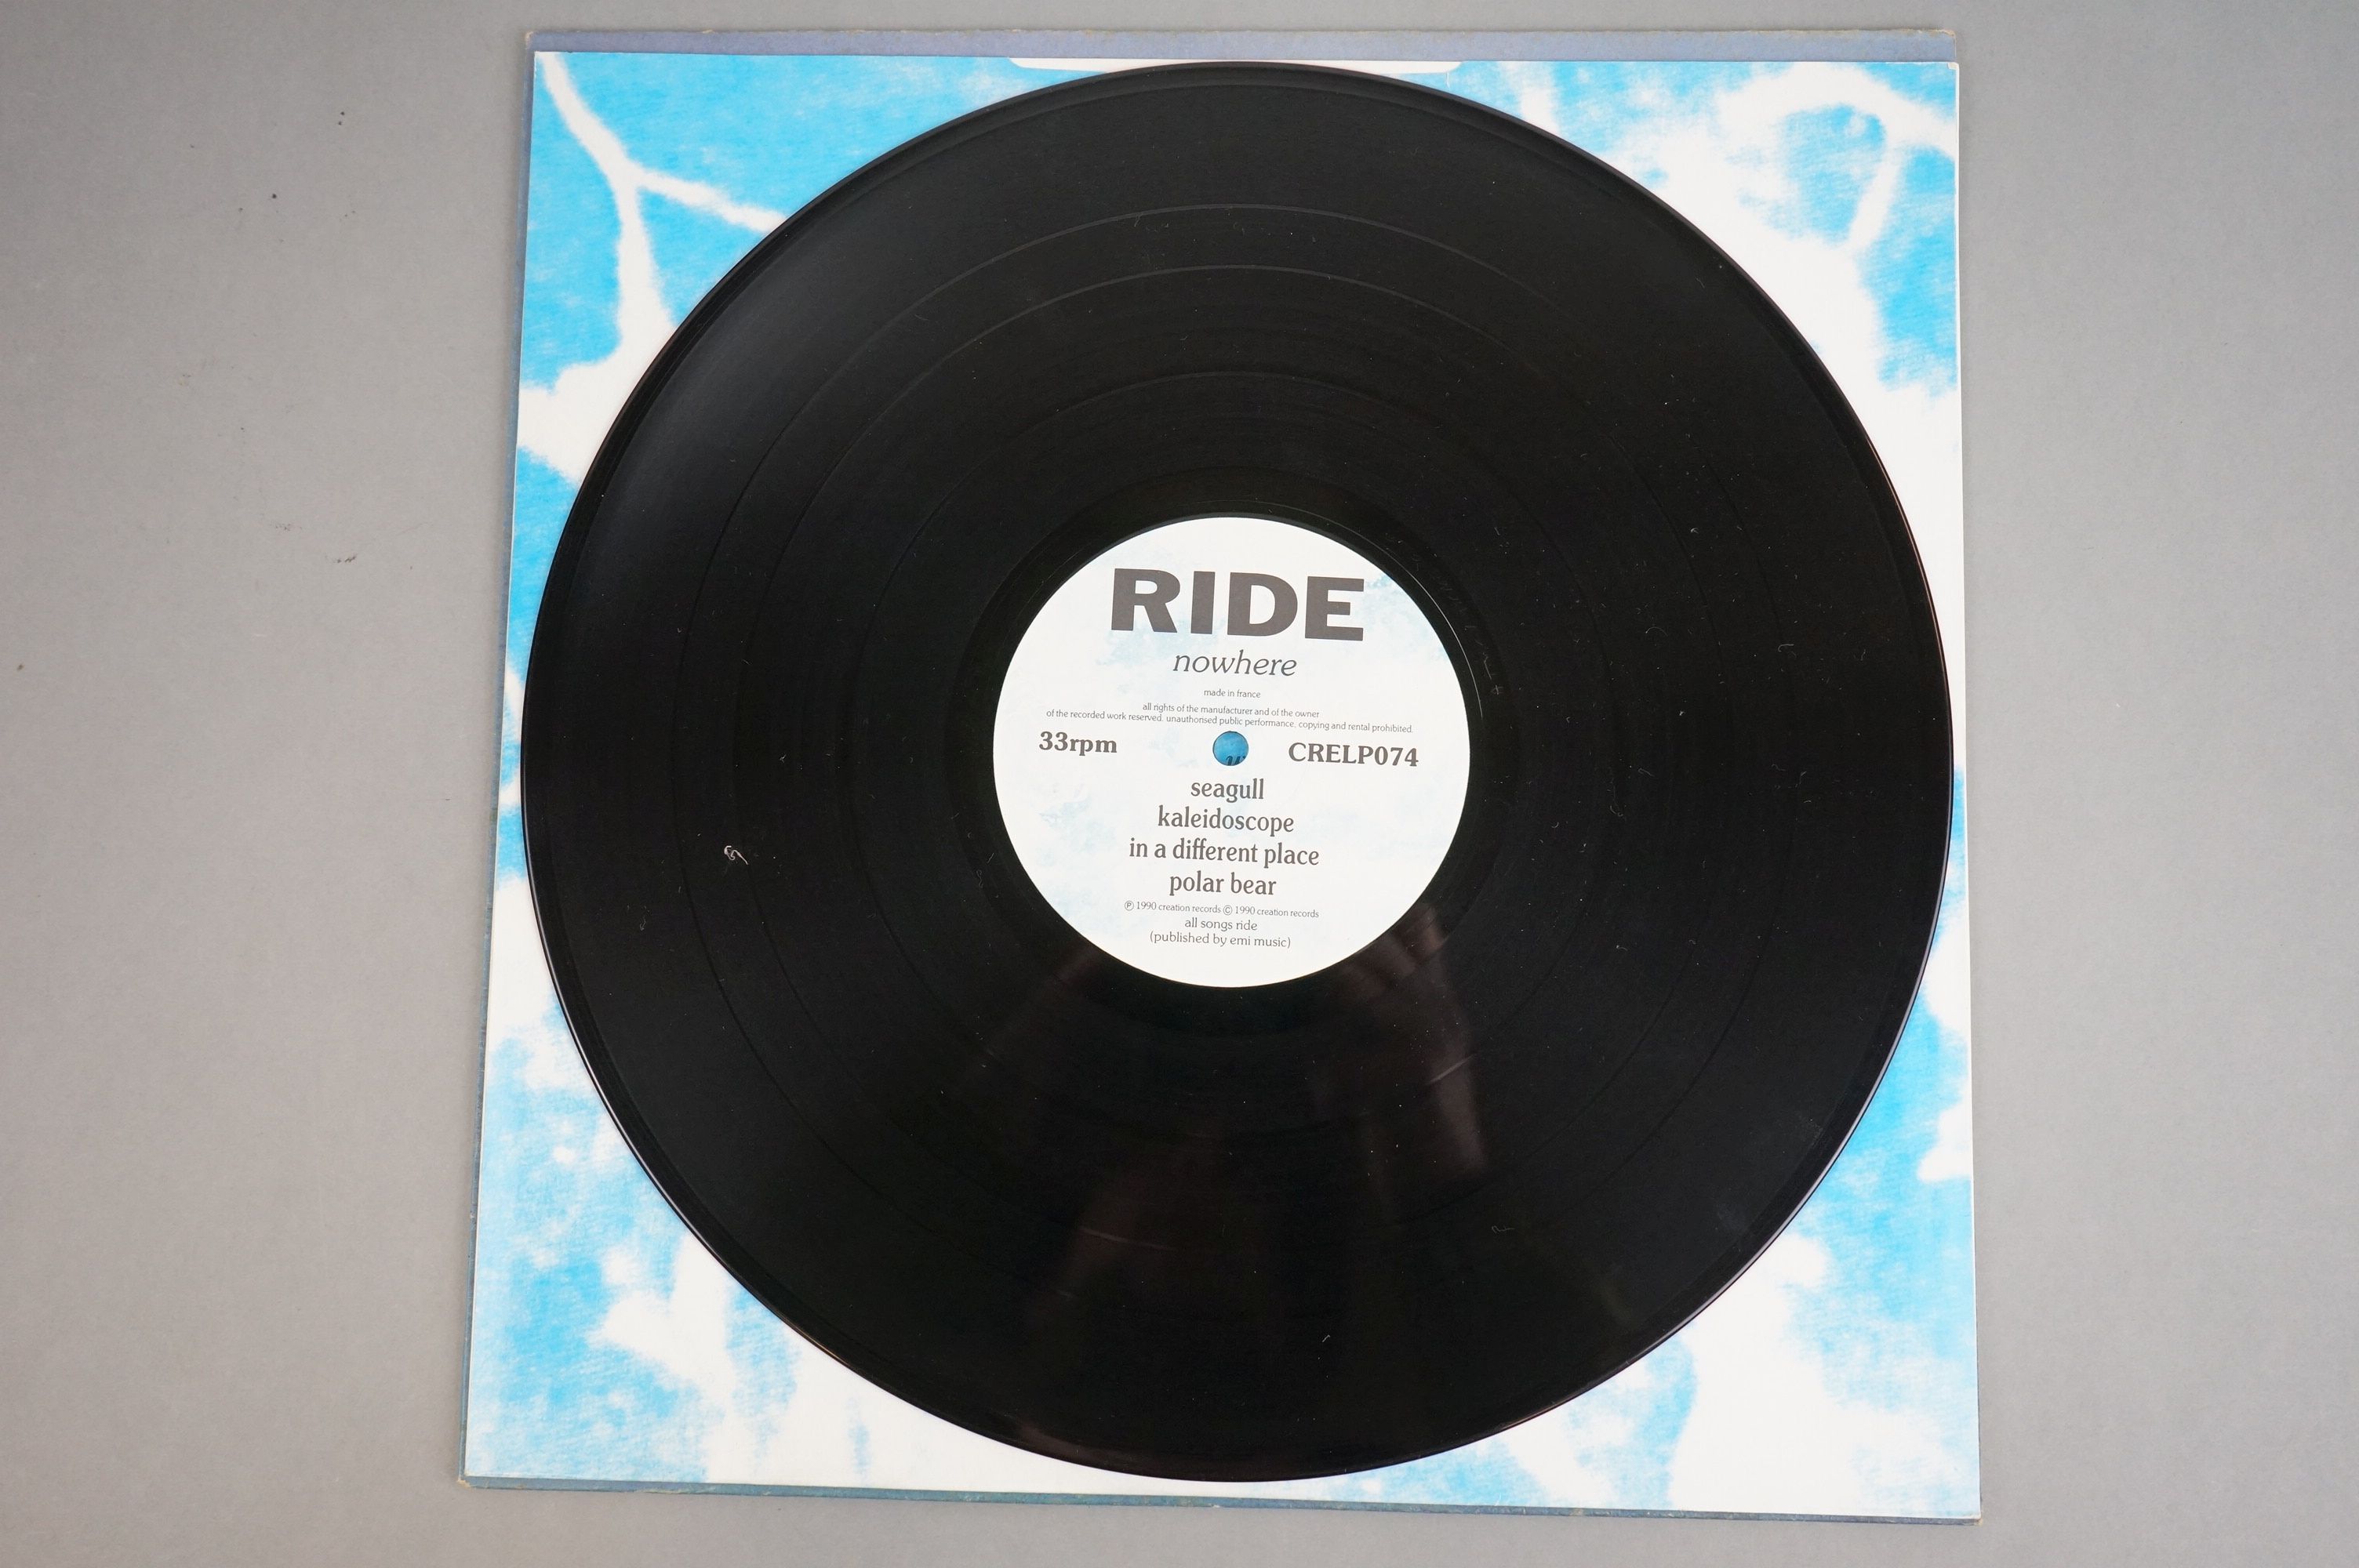 Vinyl - Ride Nowehere LP on Creation CRELP074, sleeve with original sticker, sleeves vg+. vinyl ex - Image 2 of 3